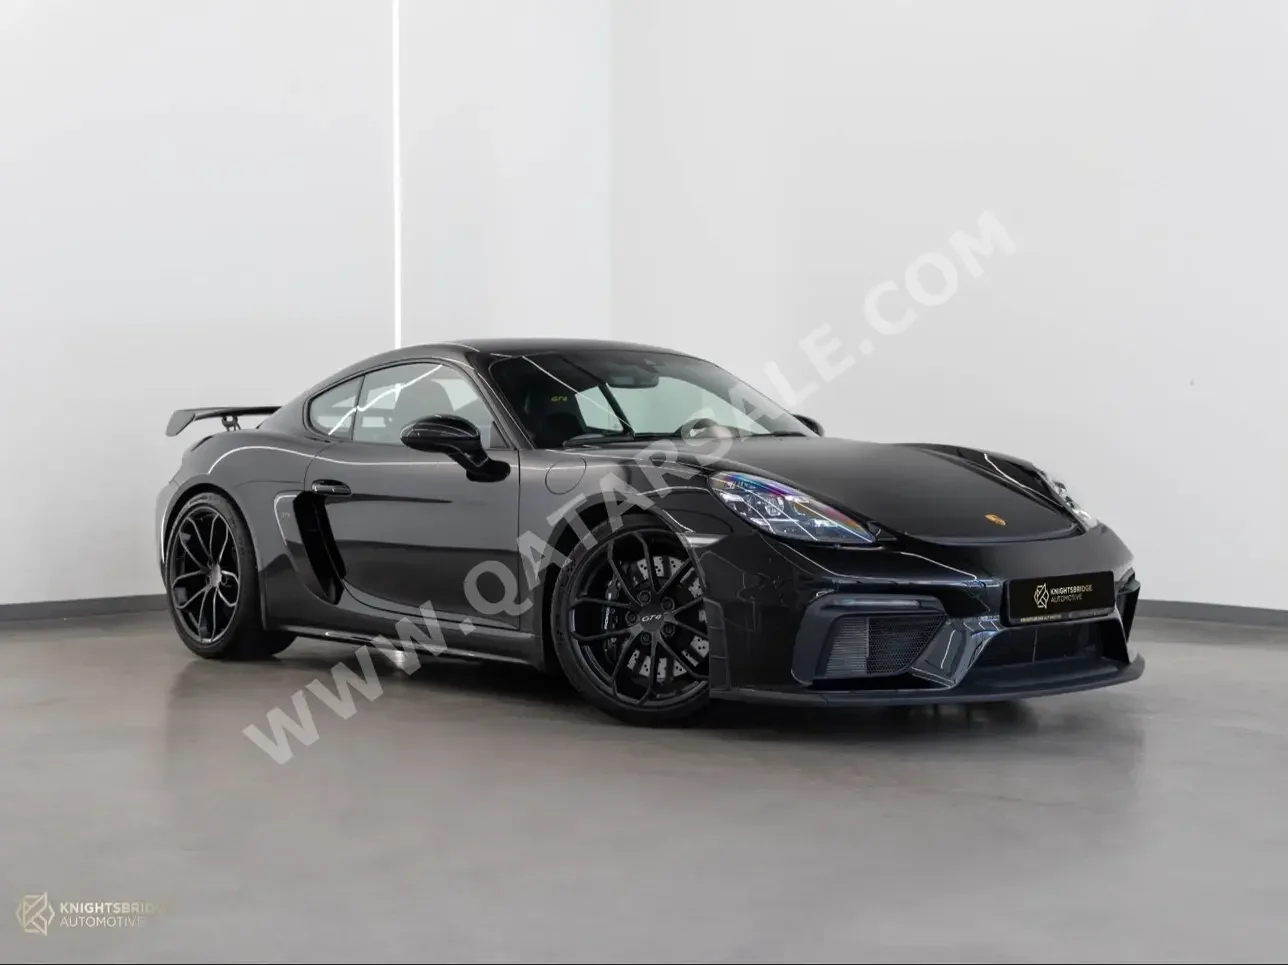 Porsche  Cayman  GT4  2022  Manual  5,700 Km  6 Cylinder  Rear Wheel Drive (RWD)  Coupe / Sport  Black  With Warranty